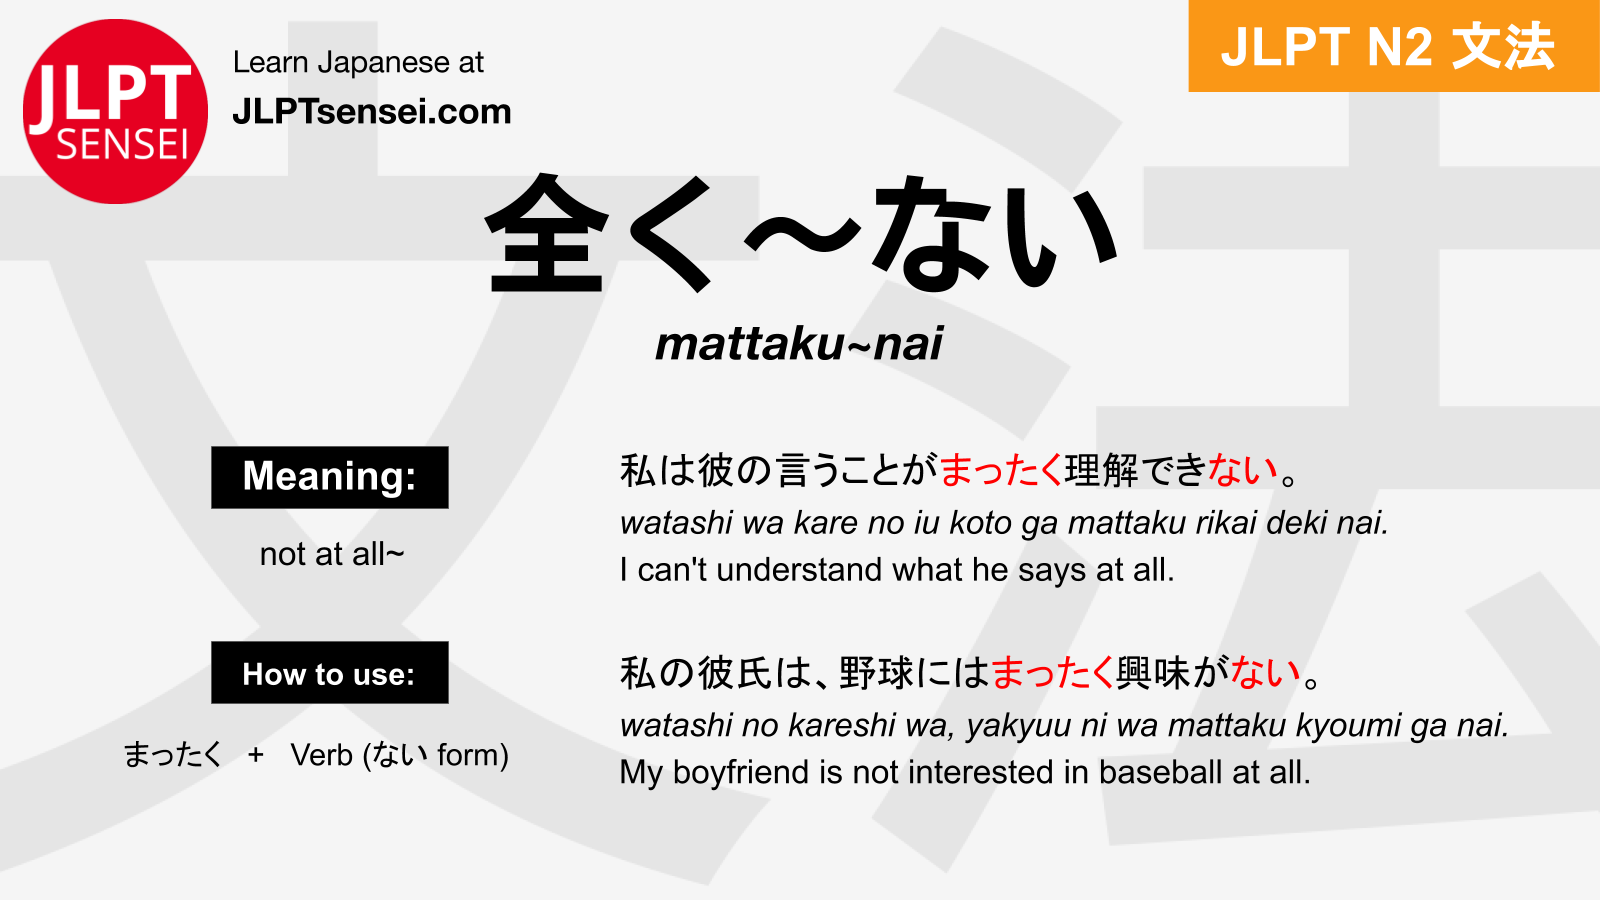 Mattaku Nai 全く ない まったく ない Jlpt N2 Grammar Meaning 文法 例文 Japanese Flashcards Jlpt Sensei